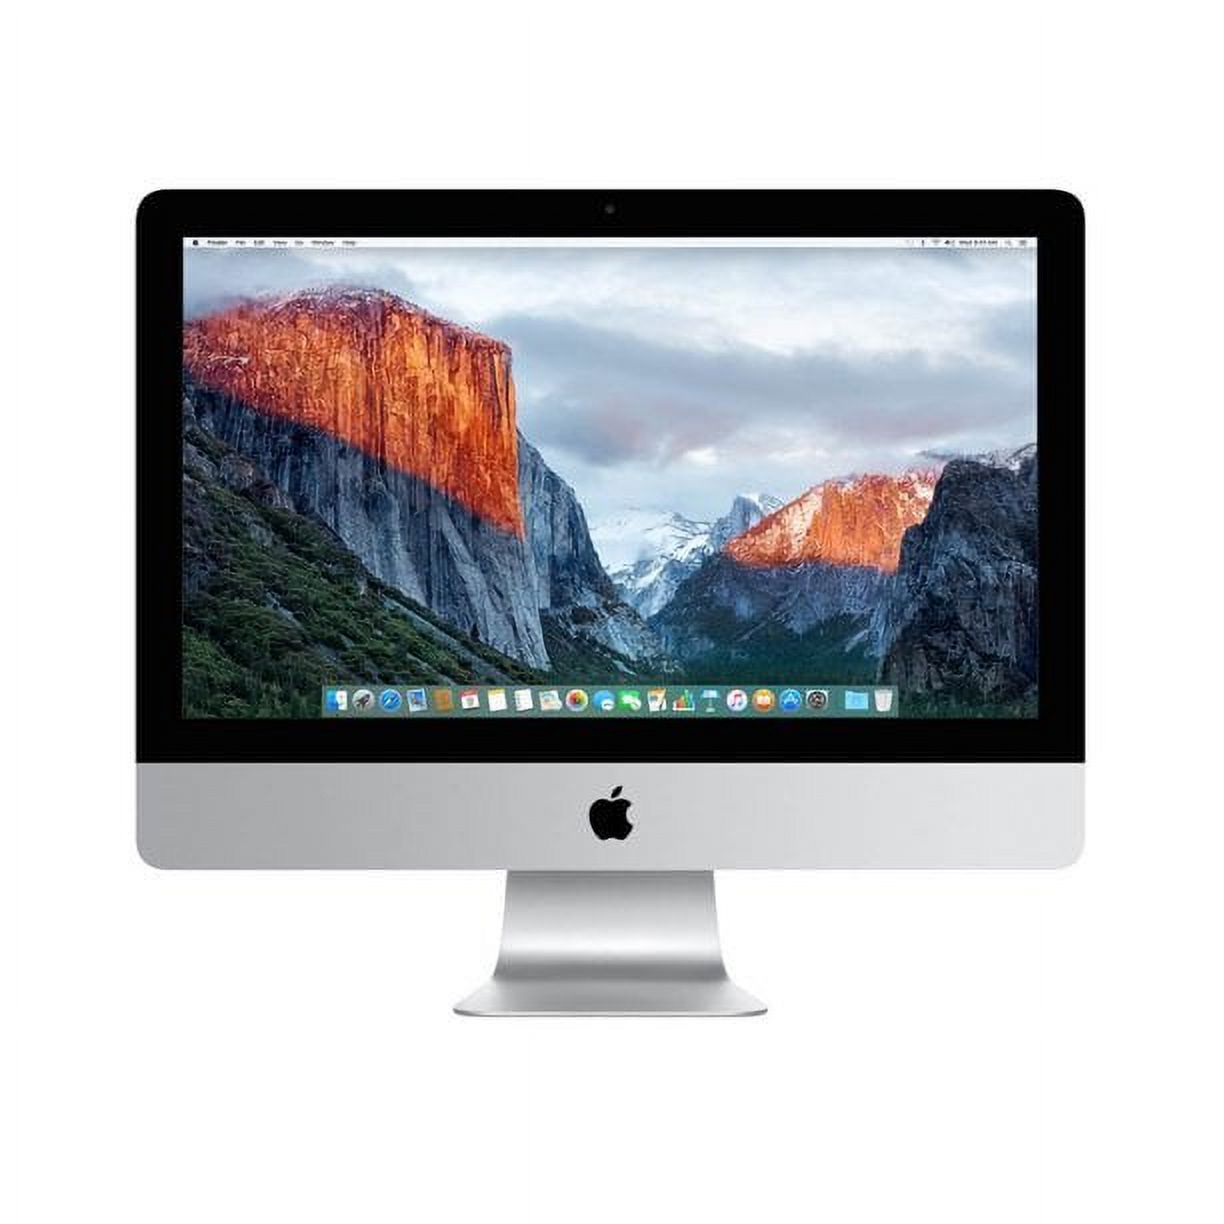 Restored Apple iMac 21.5 AIO Desktop Computer Intel Quad Core i5 8GB 1TB - MK442LL/A (Refurbished) - image 1 of 5